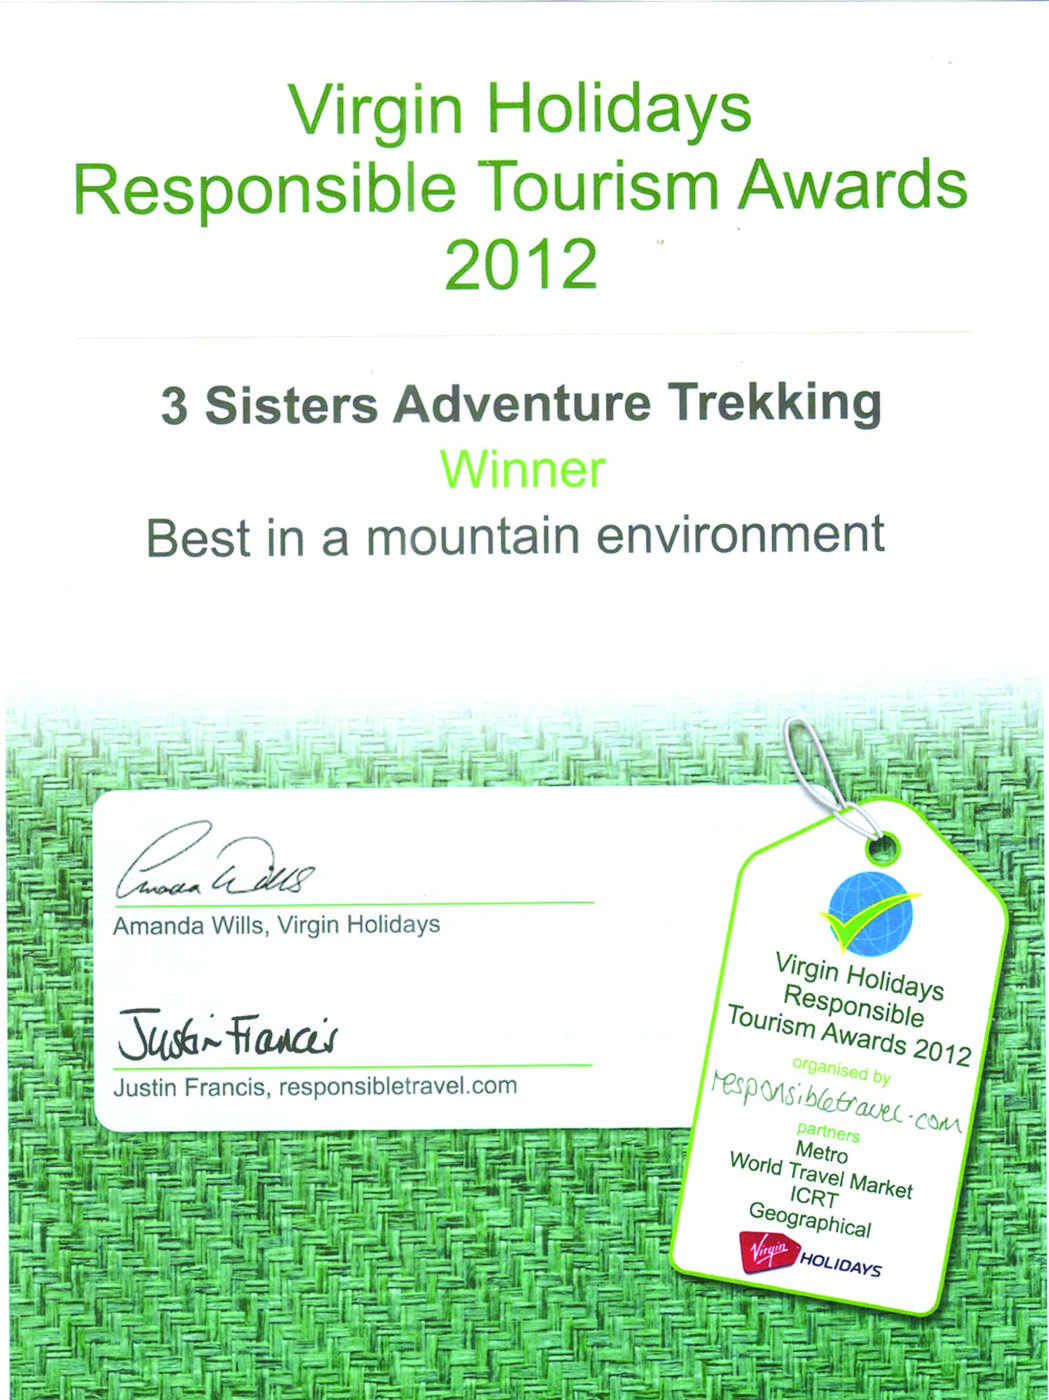 Virgin holidays responsible tourism  winner 2012